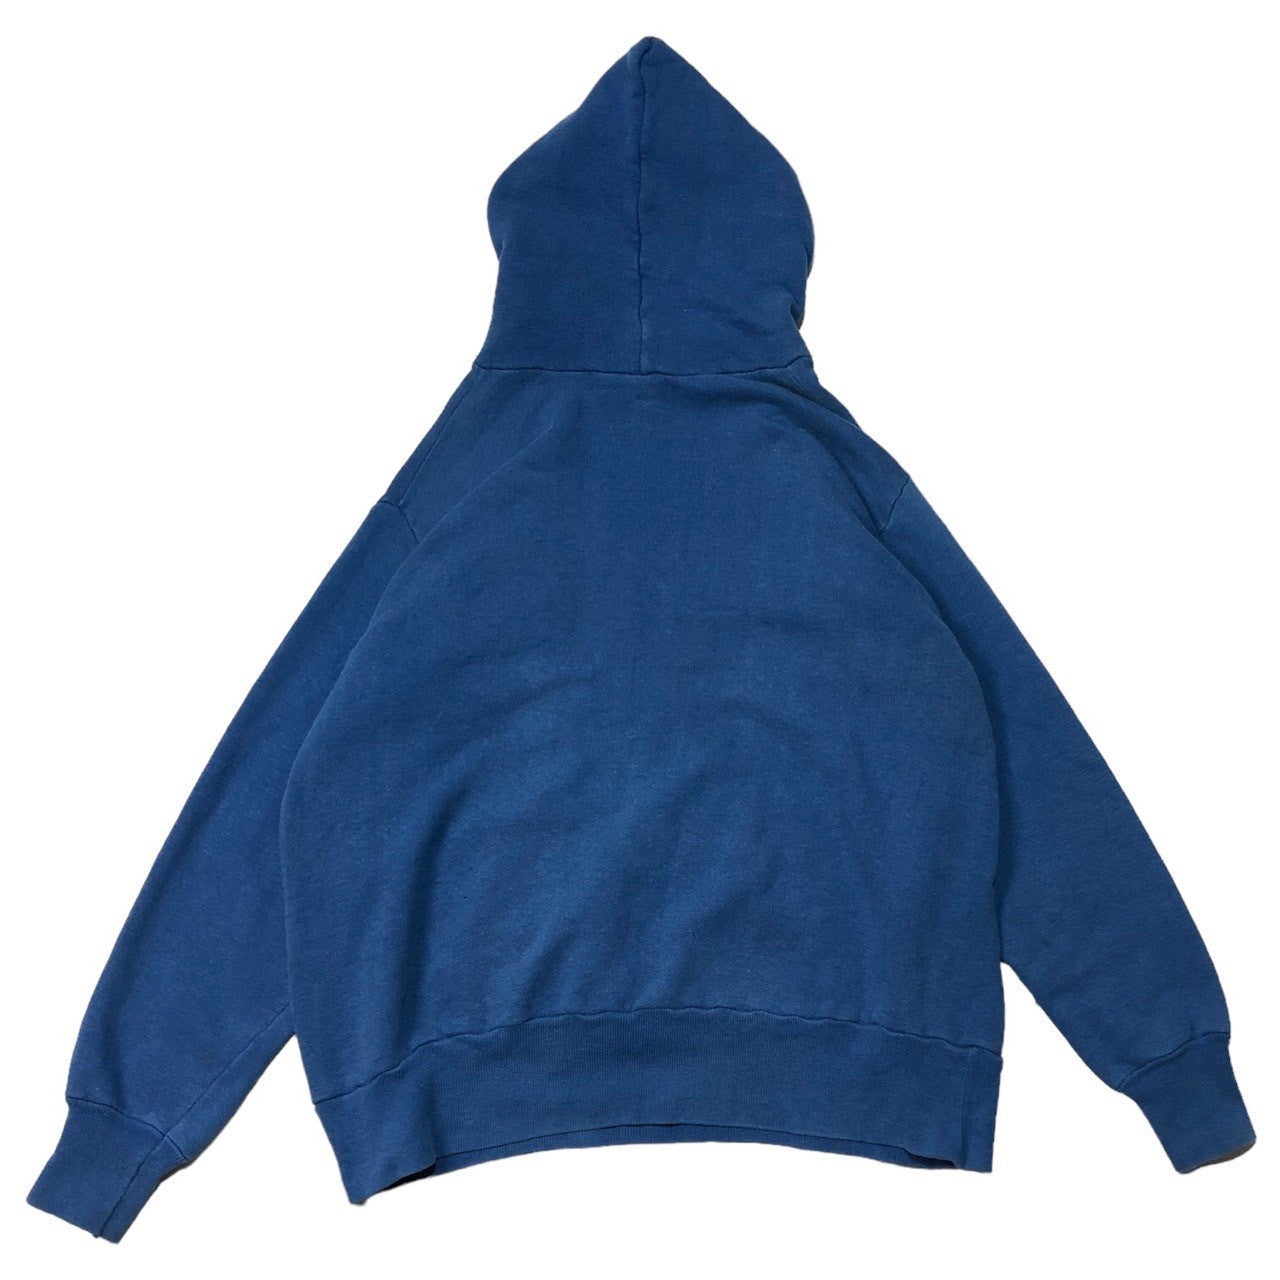 Windsor Wear(ウィンザーウェア) 60's ~ 70's vintage hoodie ヴィンテージ パーカー フーディー スウェット L ブルー 推定60年代～70年代 カナダ製 軍支給ブランド